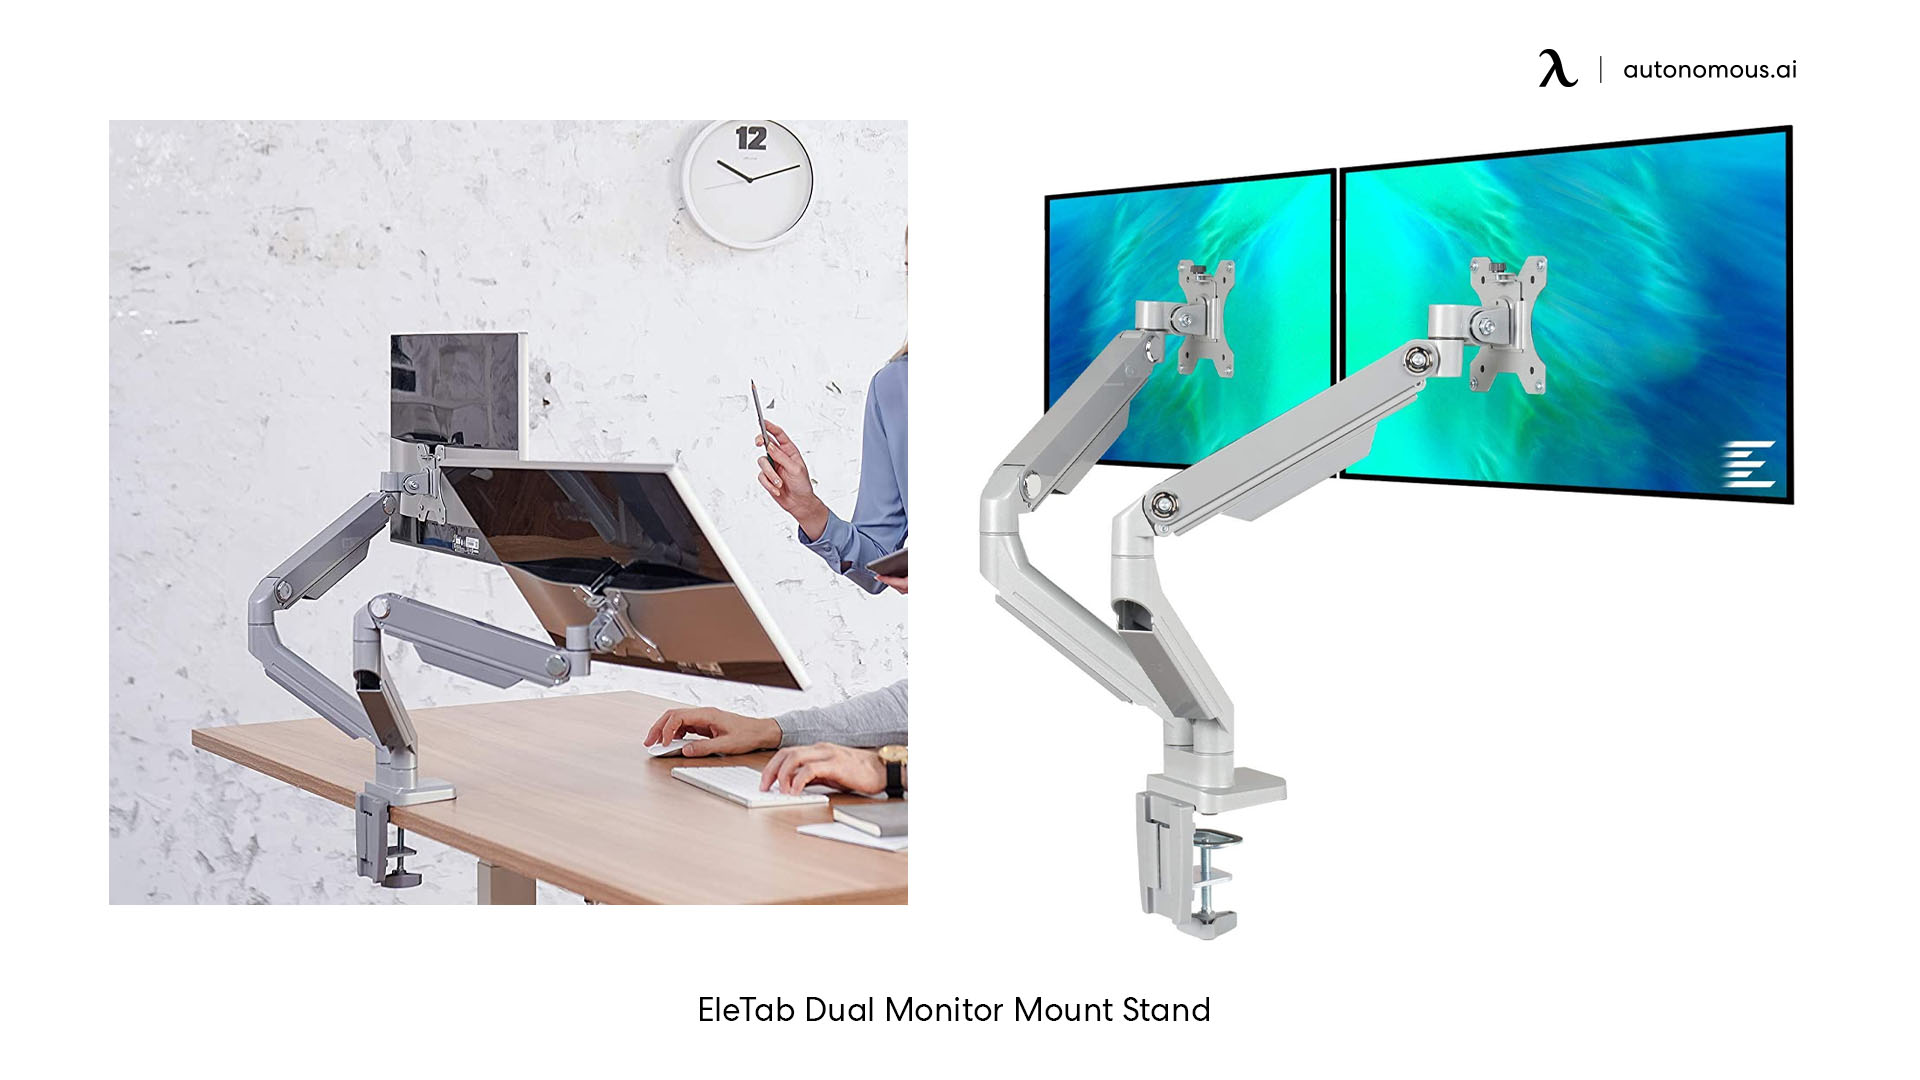 EleTab Dual Monitor Mount Stand